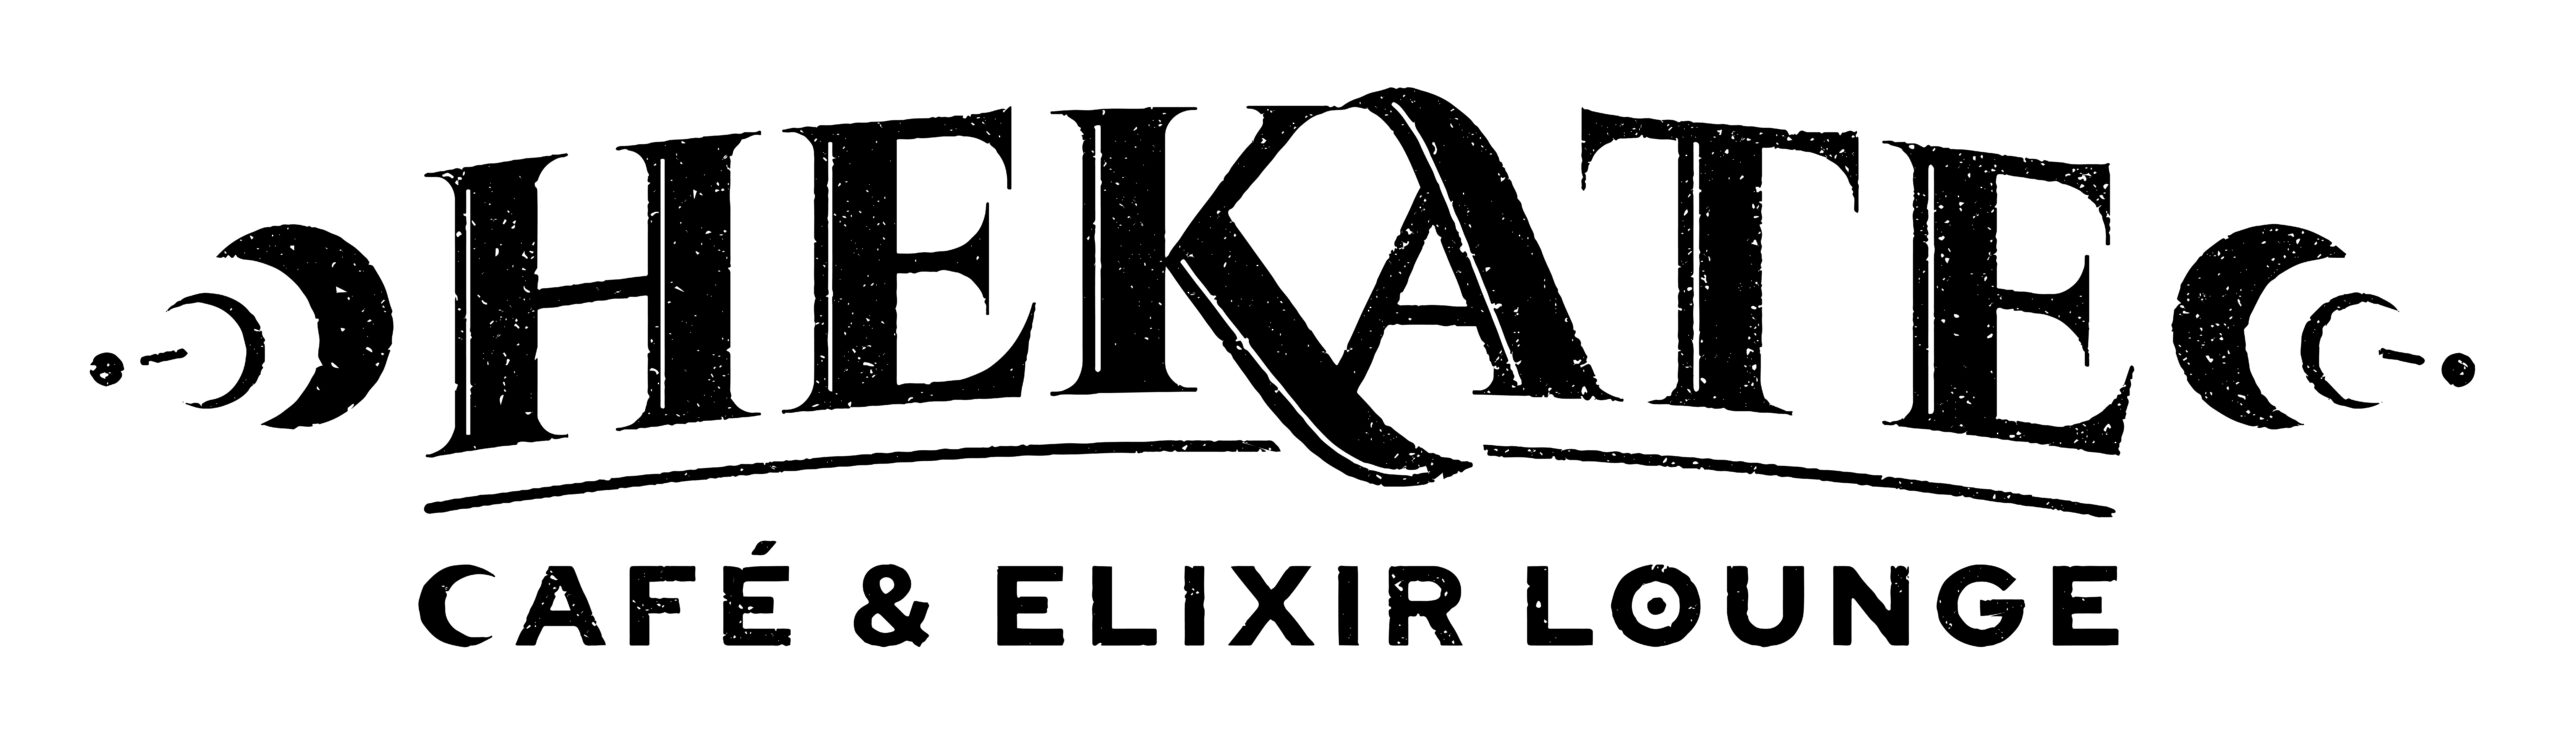 Hekate Logo Final